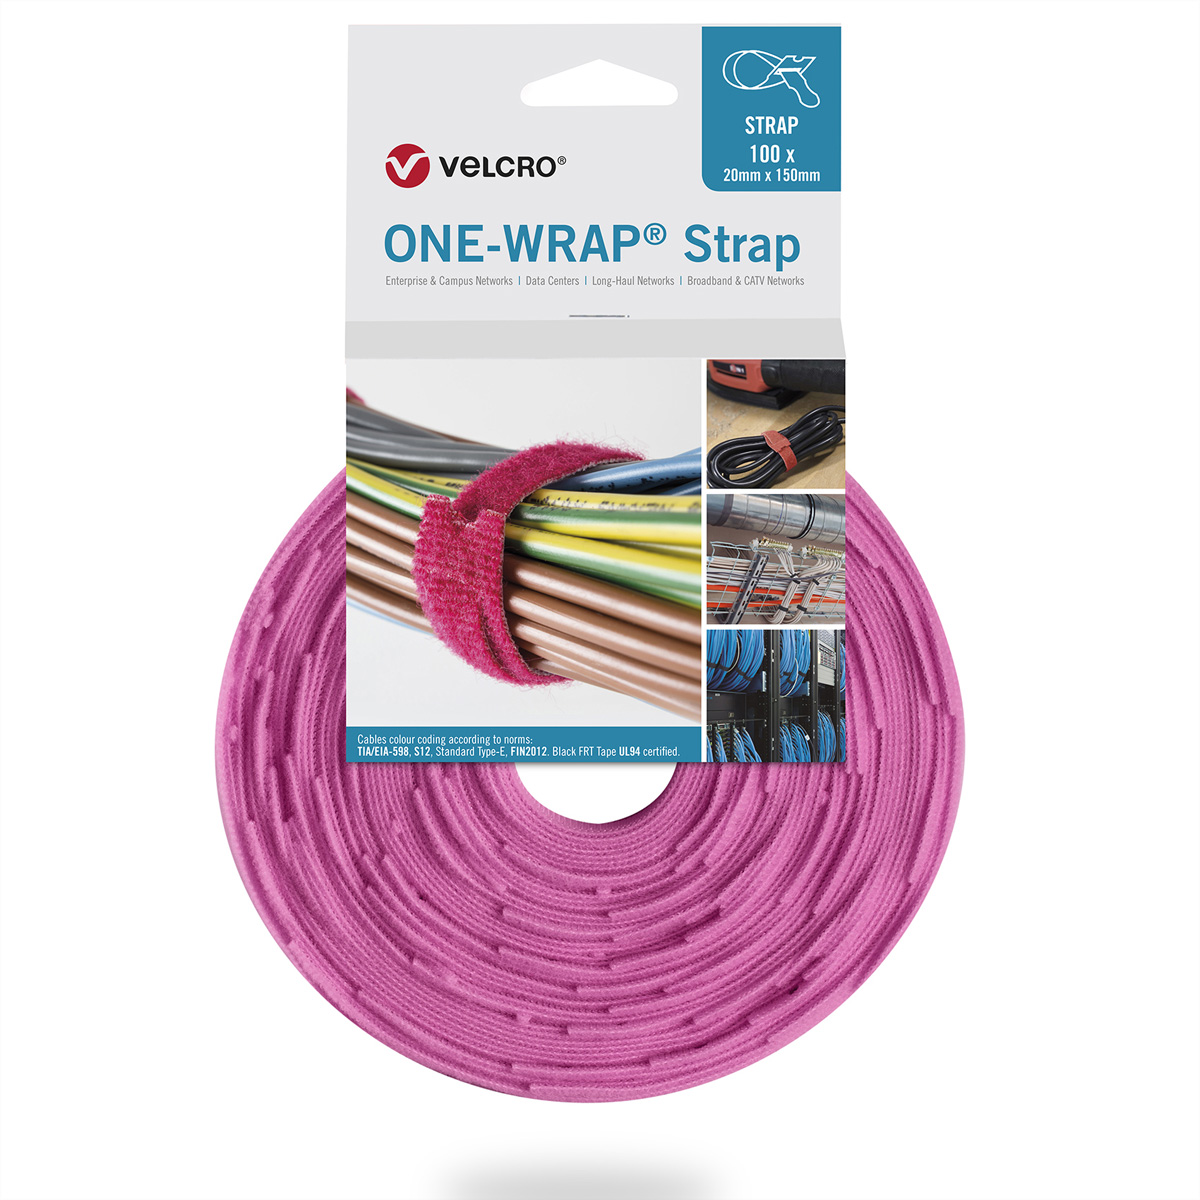 VELCRO® One Wrap® Strap 20mm x 150mm, 100 Stück, rosa